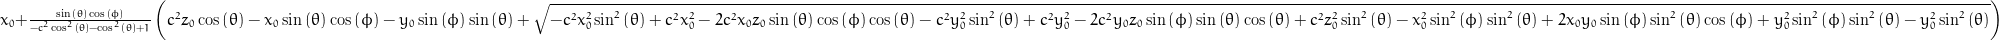 x_{0} + \frac{\sin{\left (\theta \right )} \cos{\left (\phi \right )}}{- c^{2} \cos^{2}{\left (\theta \right )} - \cos^{2}{\left (\theta \right )} + 1} \left(c^{2} z_{0} \cos{\left (\theta \right )} - x_{0} \sin{\left (\theta \right )} \cos{\left (\phi \right )} - y_{0} \sin{\left (\phi \right )} \sin{\left (\theta \right )} + \sqrt{- c^{2} x_{0}^{2} \sin^{2}{\left (\theta \right )} + c^{2} x_{0}^{2} - 2 c^{2} x_{0} z_{0} \sin{\left (\theta \right )} \cos{\left (\phi \right )} \cos{\left (\theta \right )} - c^{2} y_{0}^{2} \sin^{2}{\left (\theta \right )} + c^{2} y_{0}^{2} - 2 c^{2} y_{0} z_{0} \sin{\left (\phi \right )} \sin{\left (\theta \right )} \cos{\left (\theta \right )} + c^{2} z_{0}^{2} \sin^{2}{\left (\theta \right )} - x_{0}^{2} \sin^{2}{\left (\phi \right )} \sin^{2}{\left (\theta \right )} + 2 x_{0} y_{0} \sin{\left (\phi \right )} \sin^{2}{\left (\theta \right )} \cos{\left (\phi \right )} + y_{0}^{2} \sin^{2}{\left (\phi \right )} \sin^{2}{\left (\theta \right )} - y_{0}^{2} \sin^{2}{\left (\theta \right )}}\right)